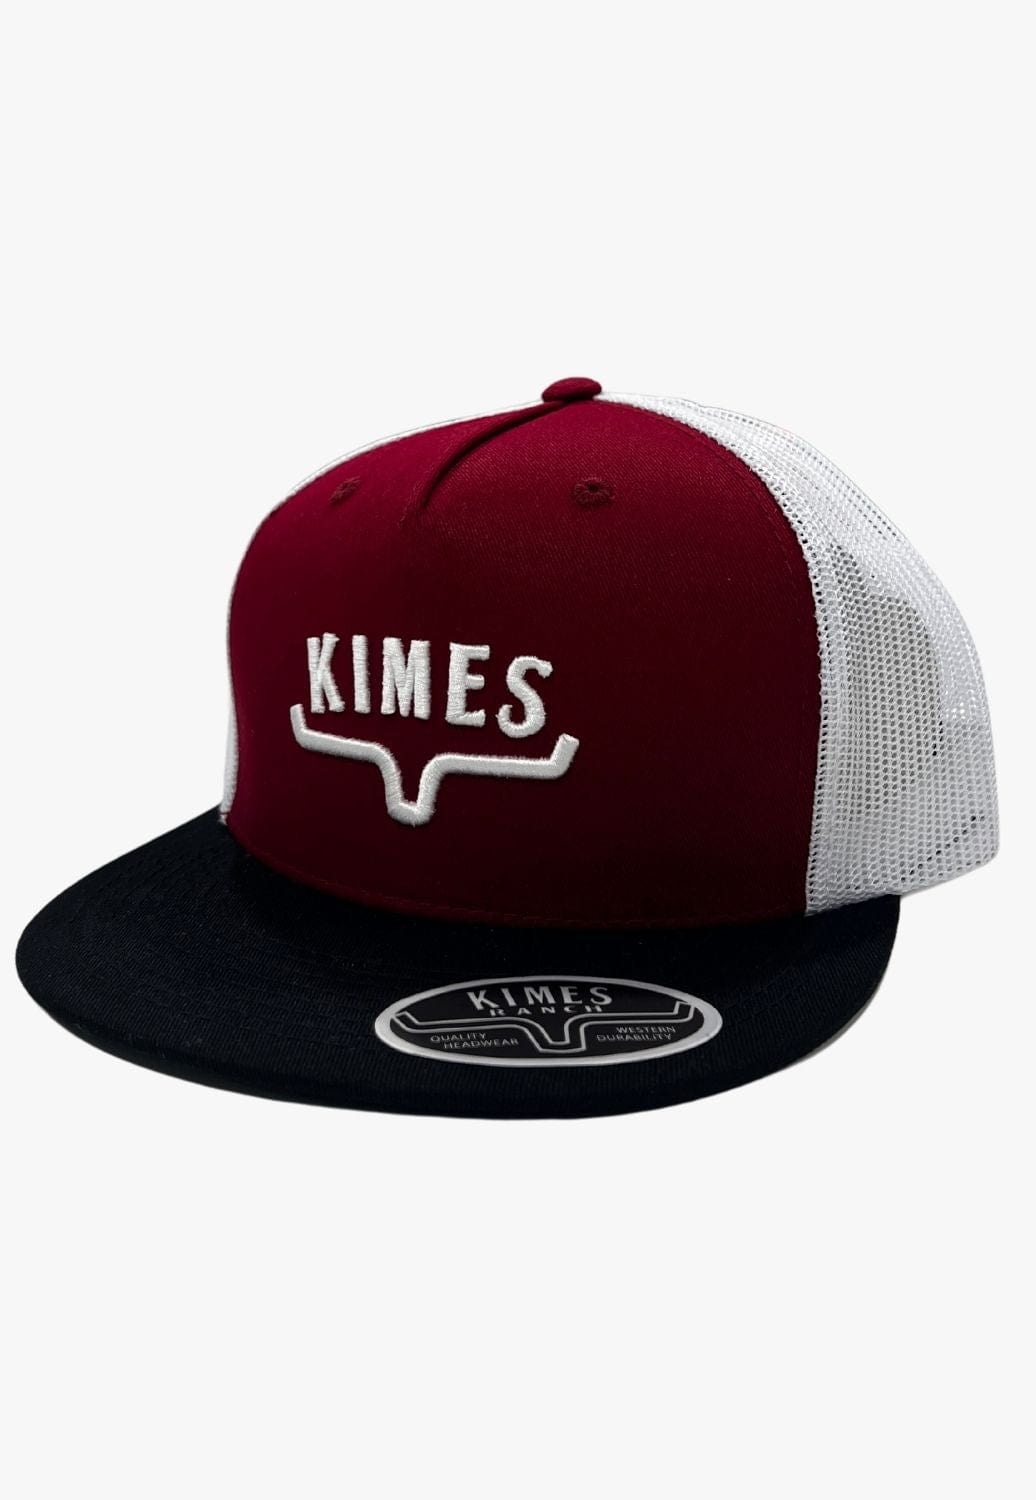 Kimes Ranch HATS - Caps Dark Red Kimes Huxton Trucker Cap